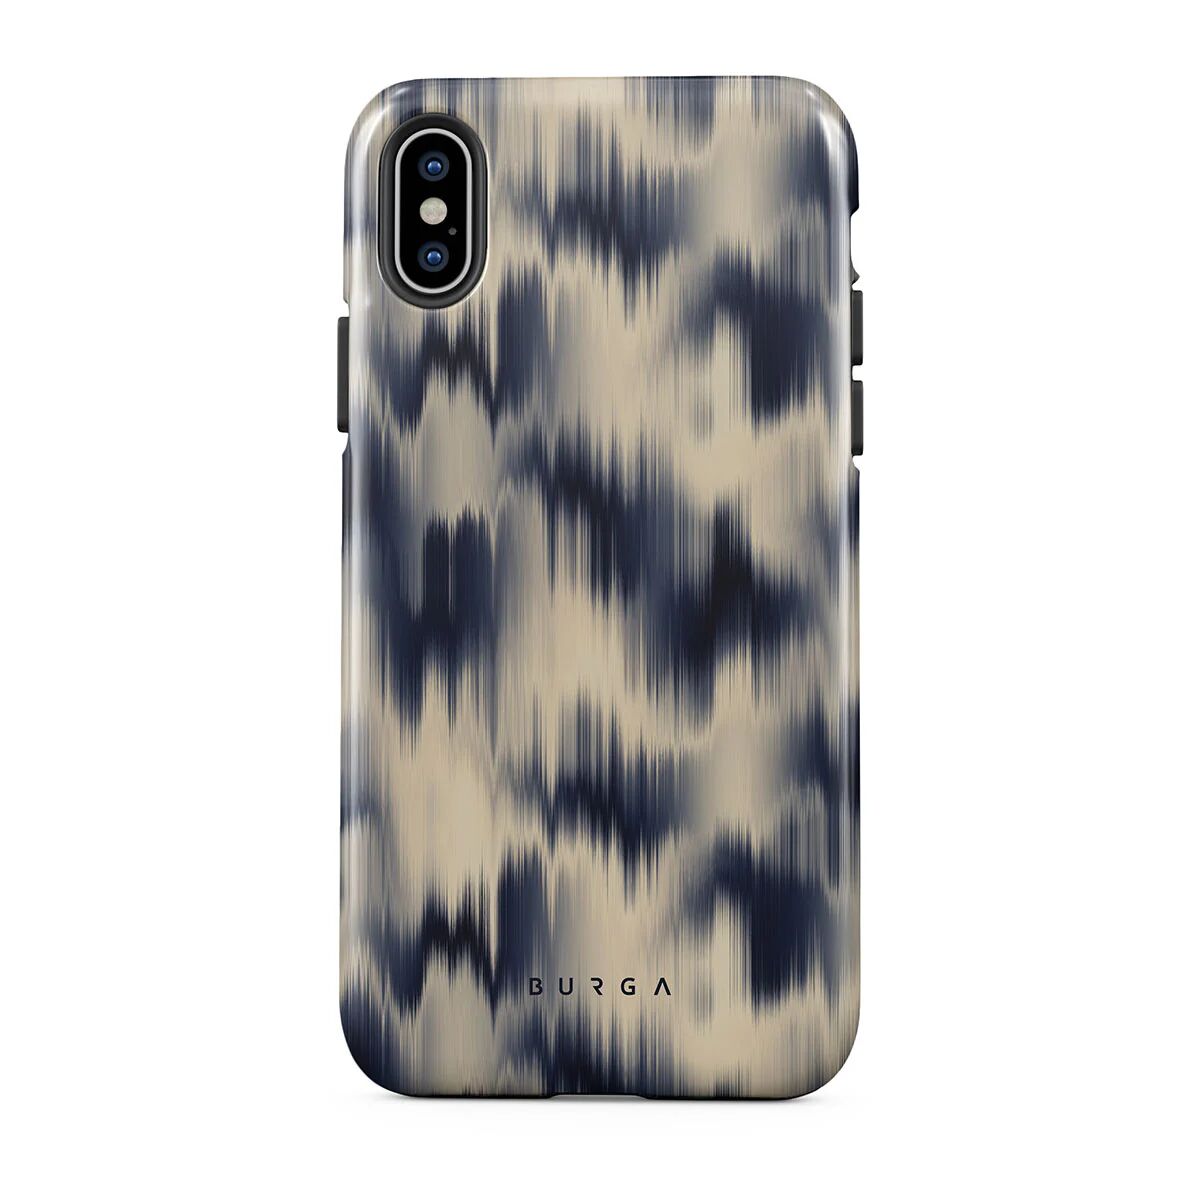 BURGA Avalanche - iPhone XS Max Case